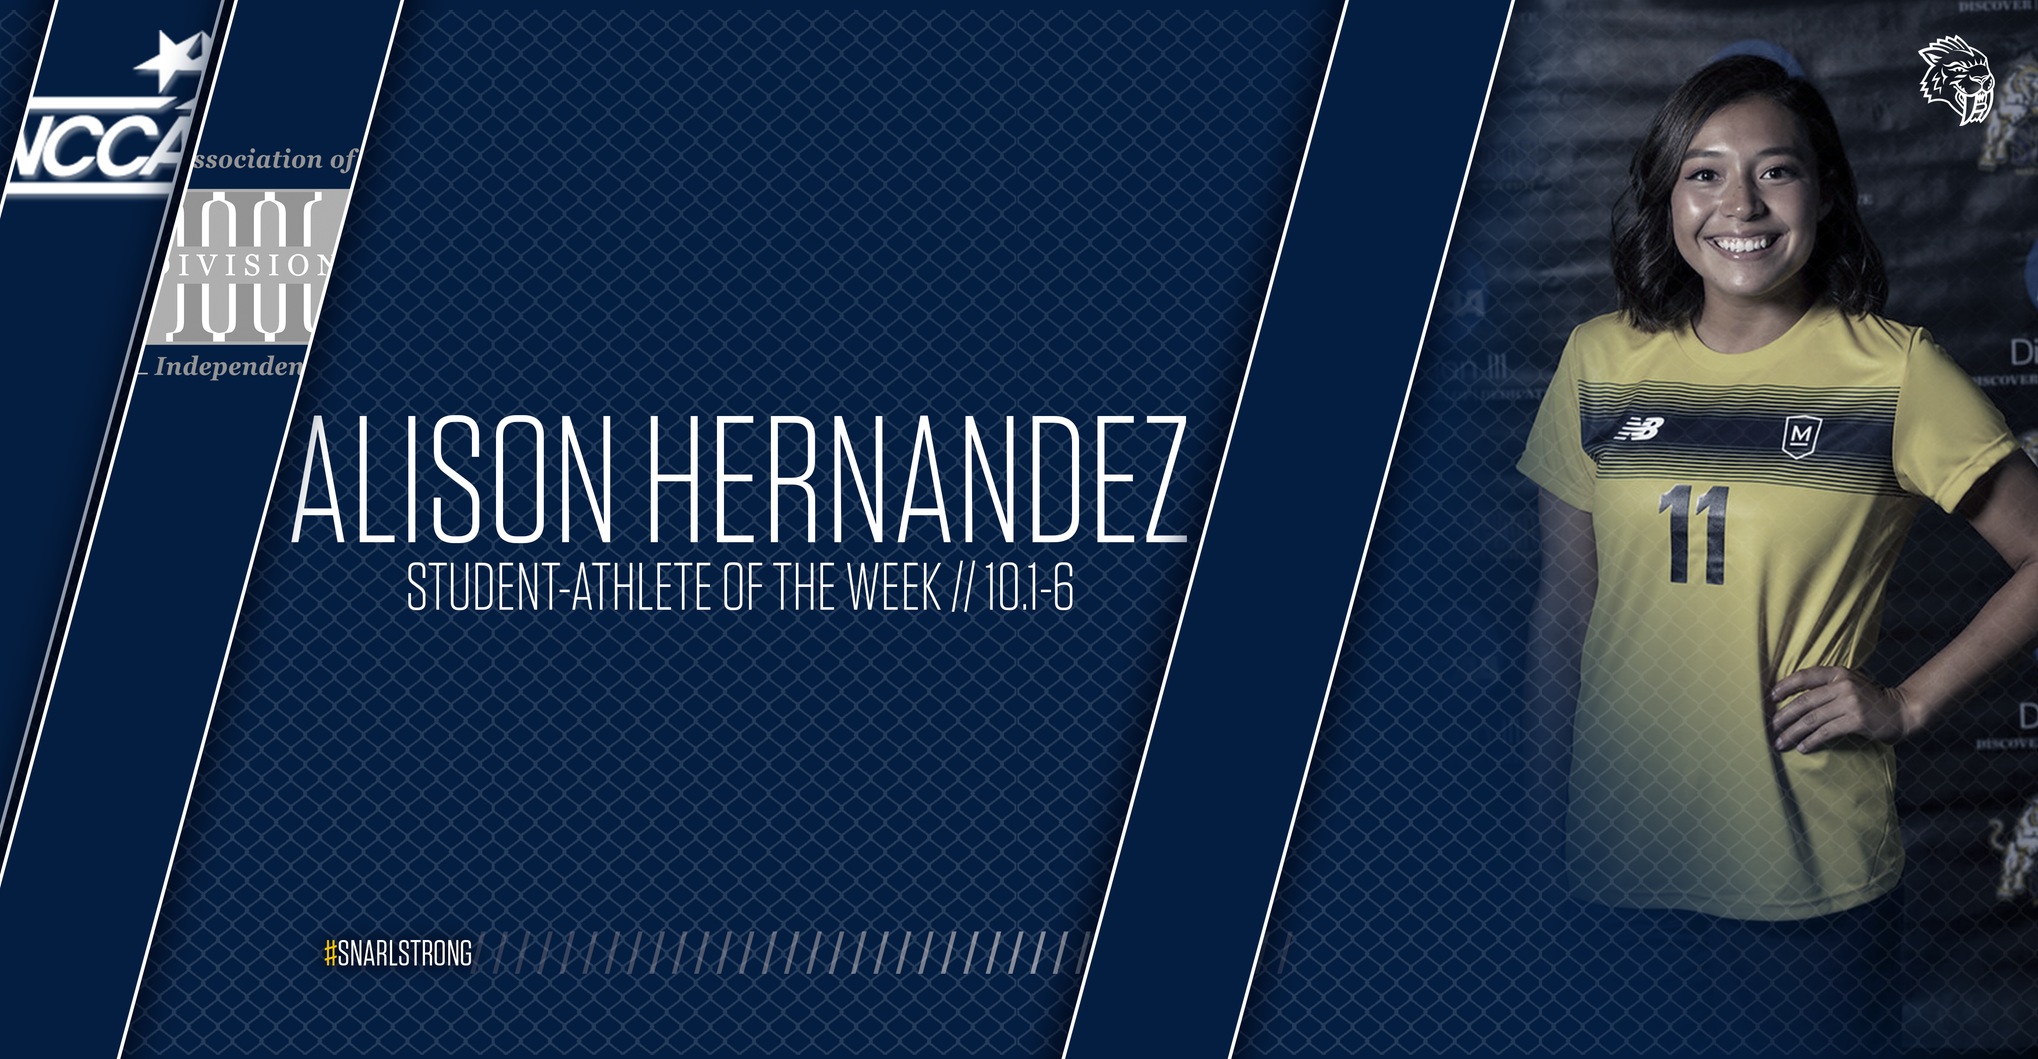 Honors for Hernandez